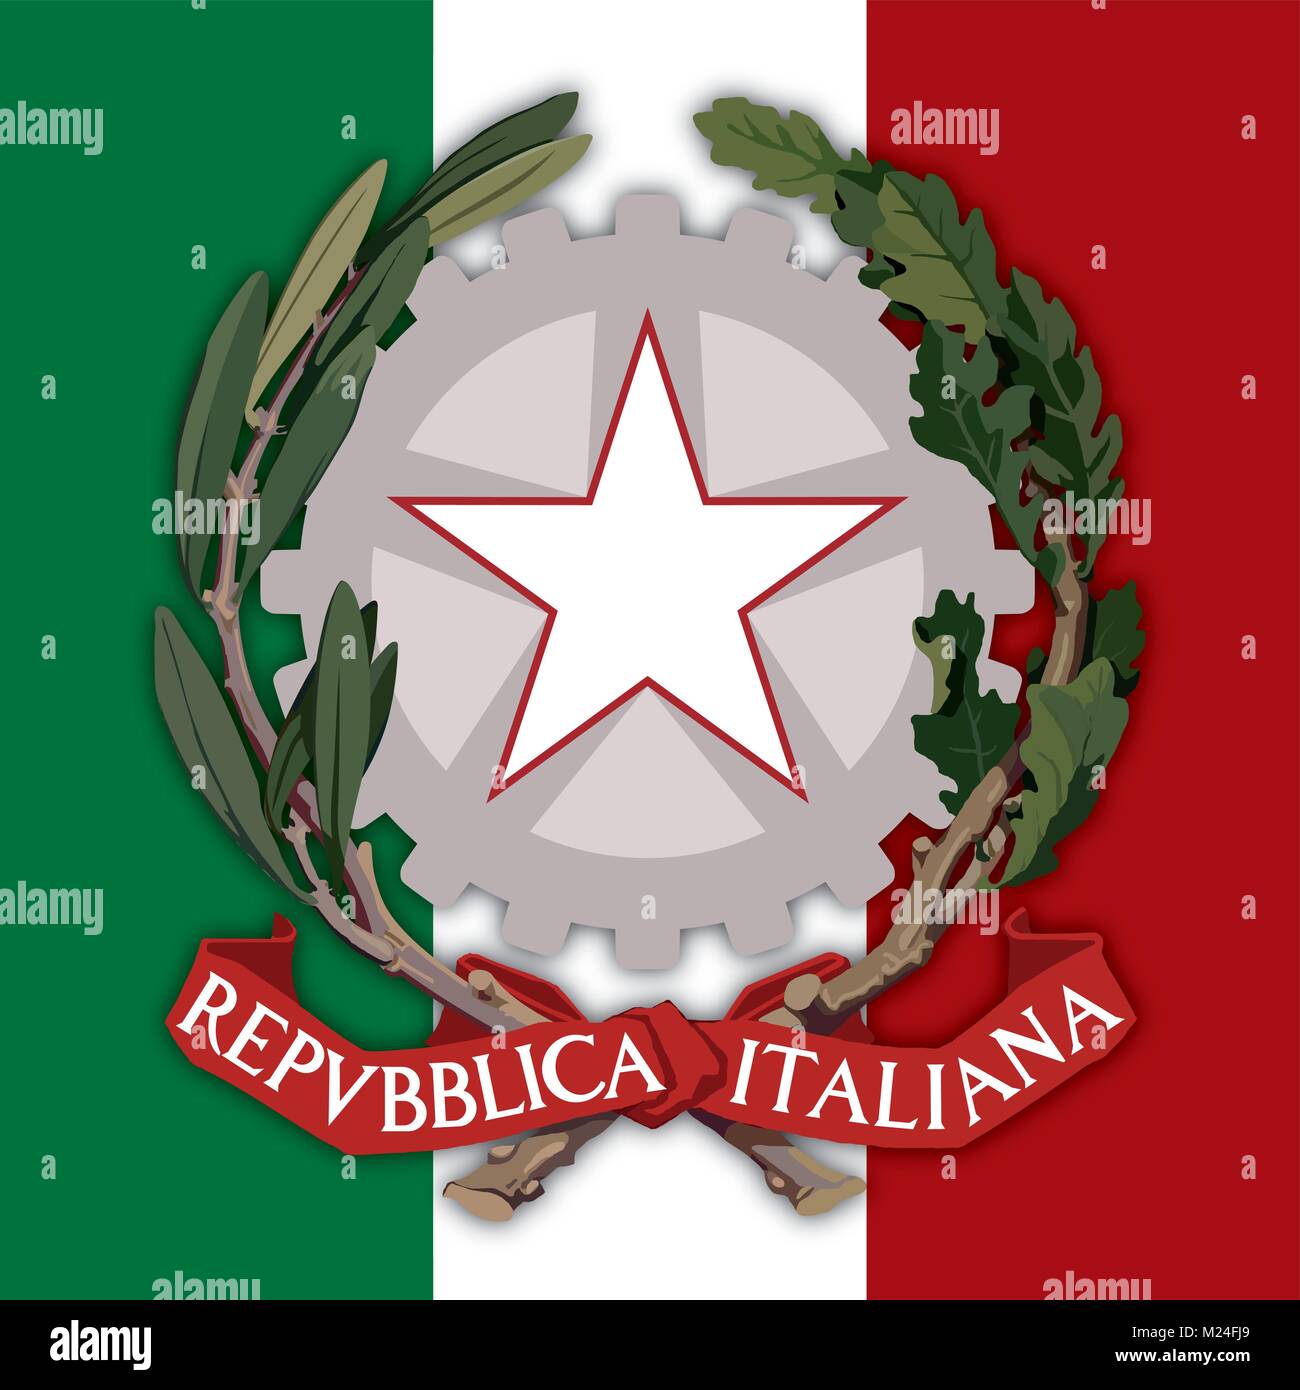 Italien Wappen und Flagge, offiziellen Symbole der Nation  Stock-Vektorgrafik - Alamy